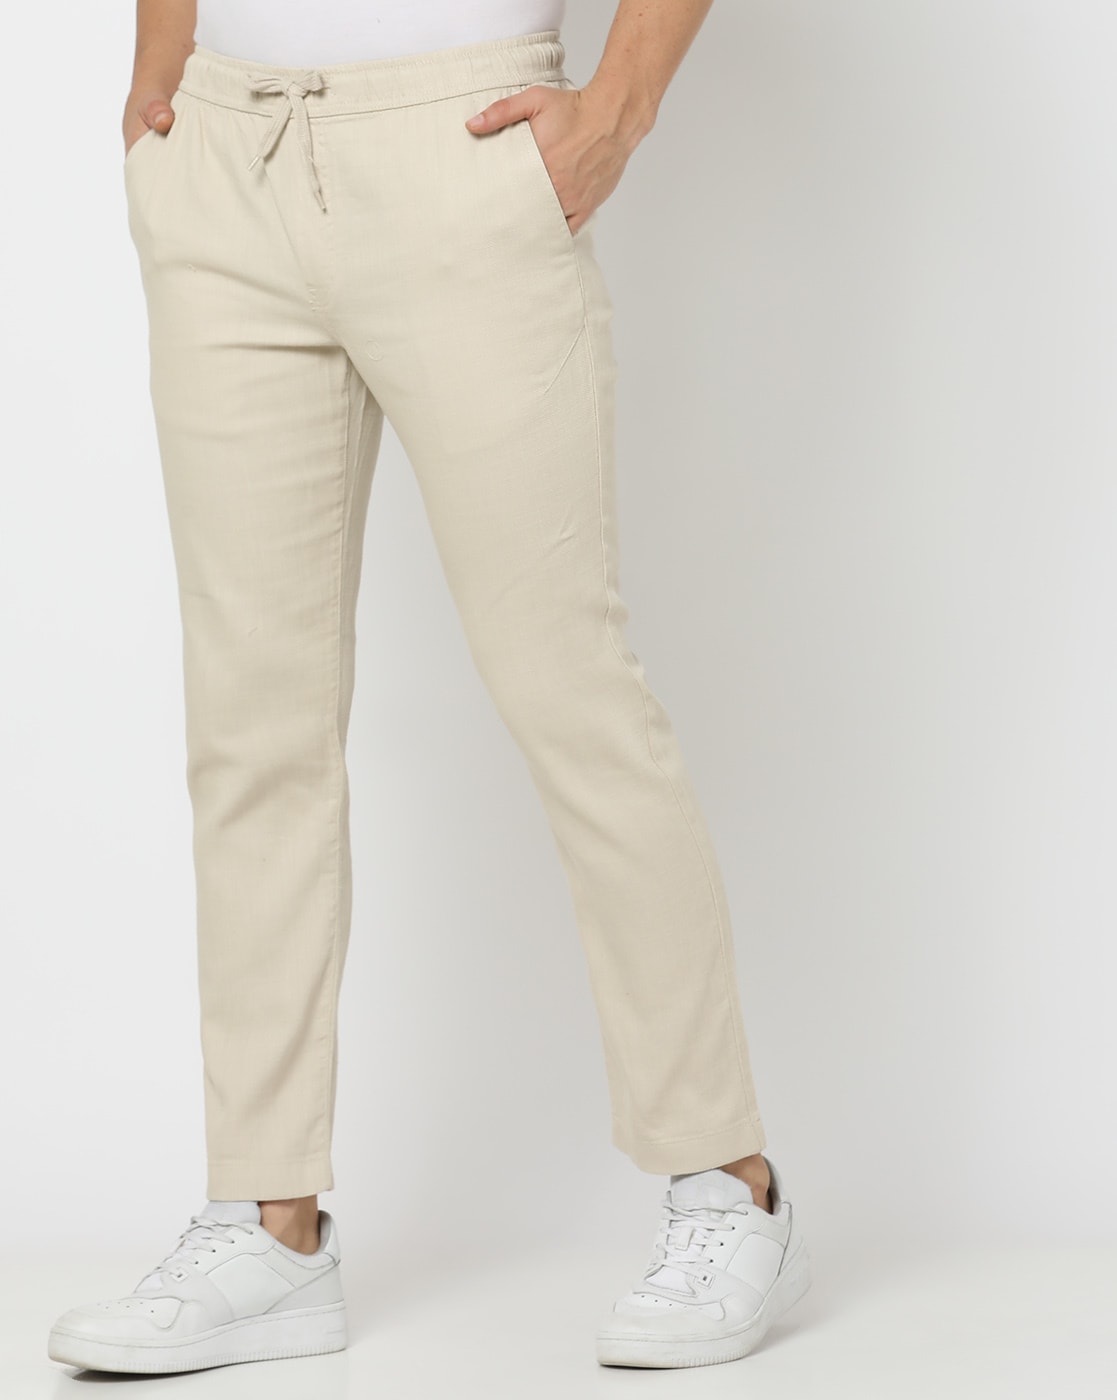 Kanchiro Green Slim Straight Utility Pants Mens Size XXL - beyond exchange